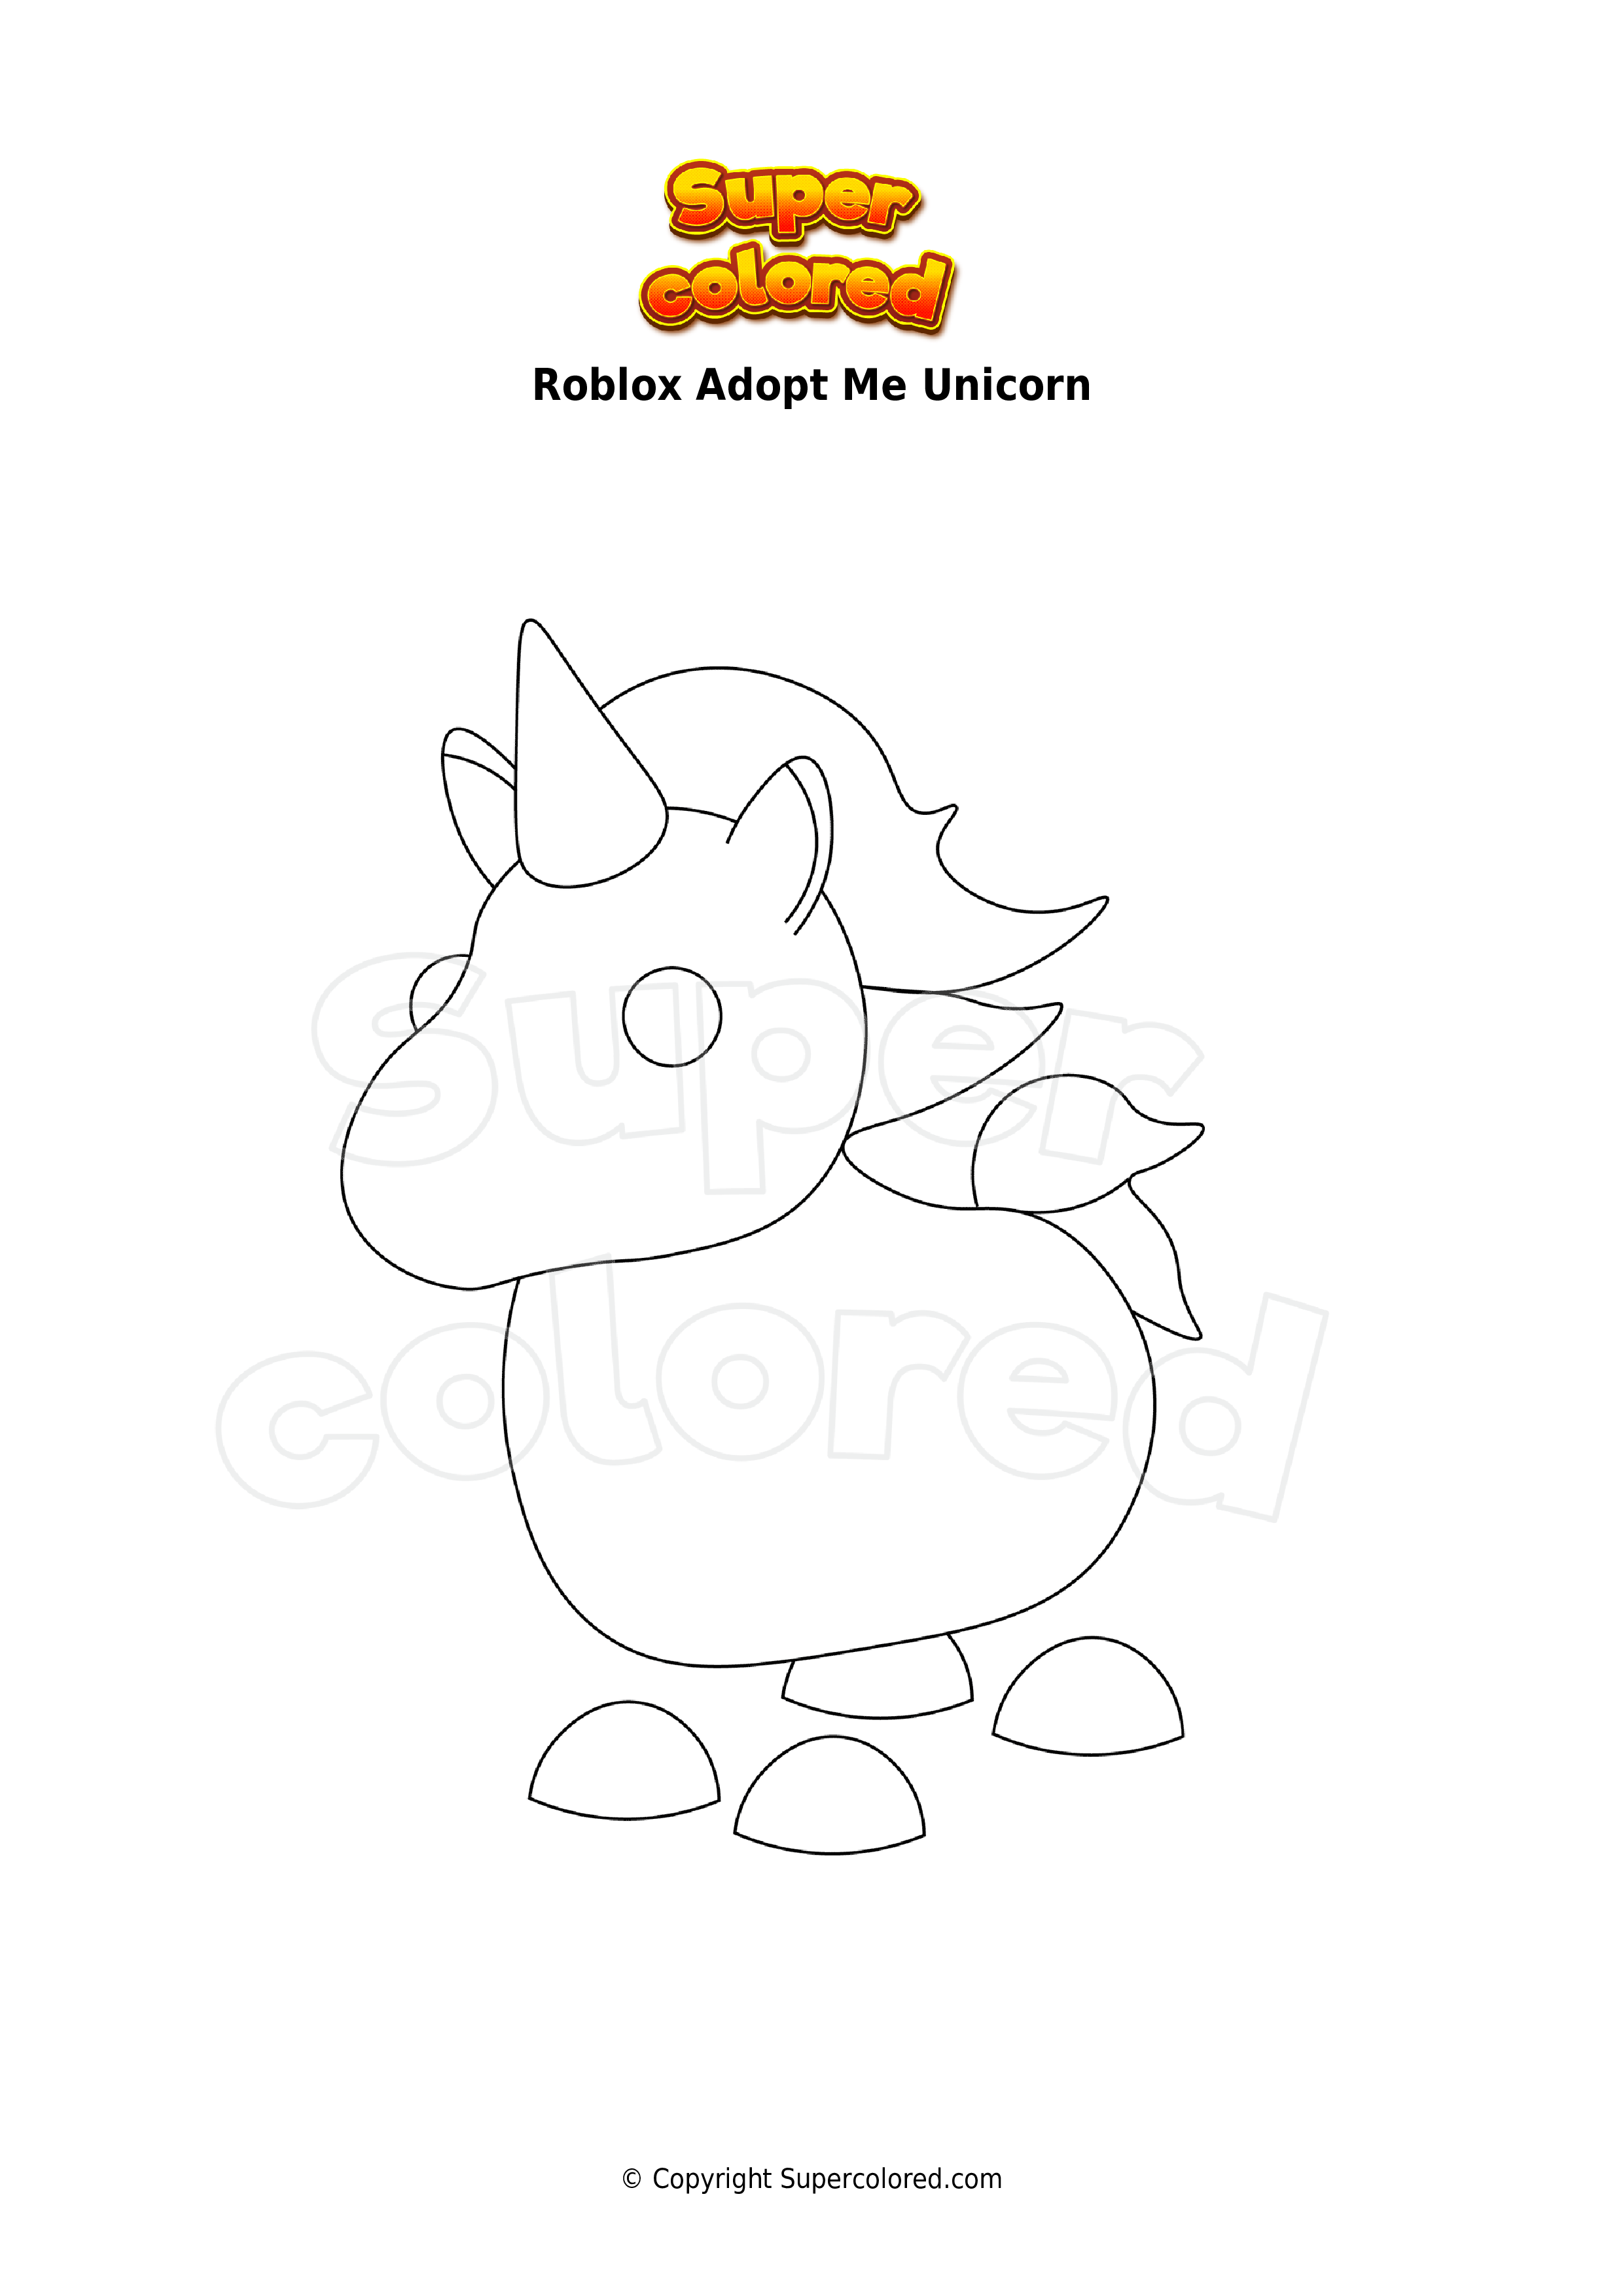 Roblox Adopt Me Unicorn Images